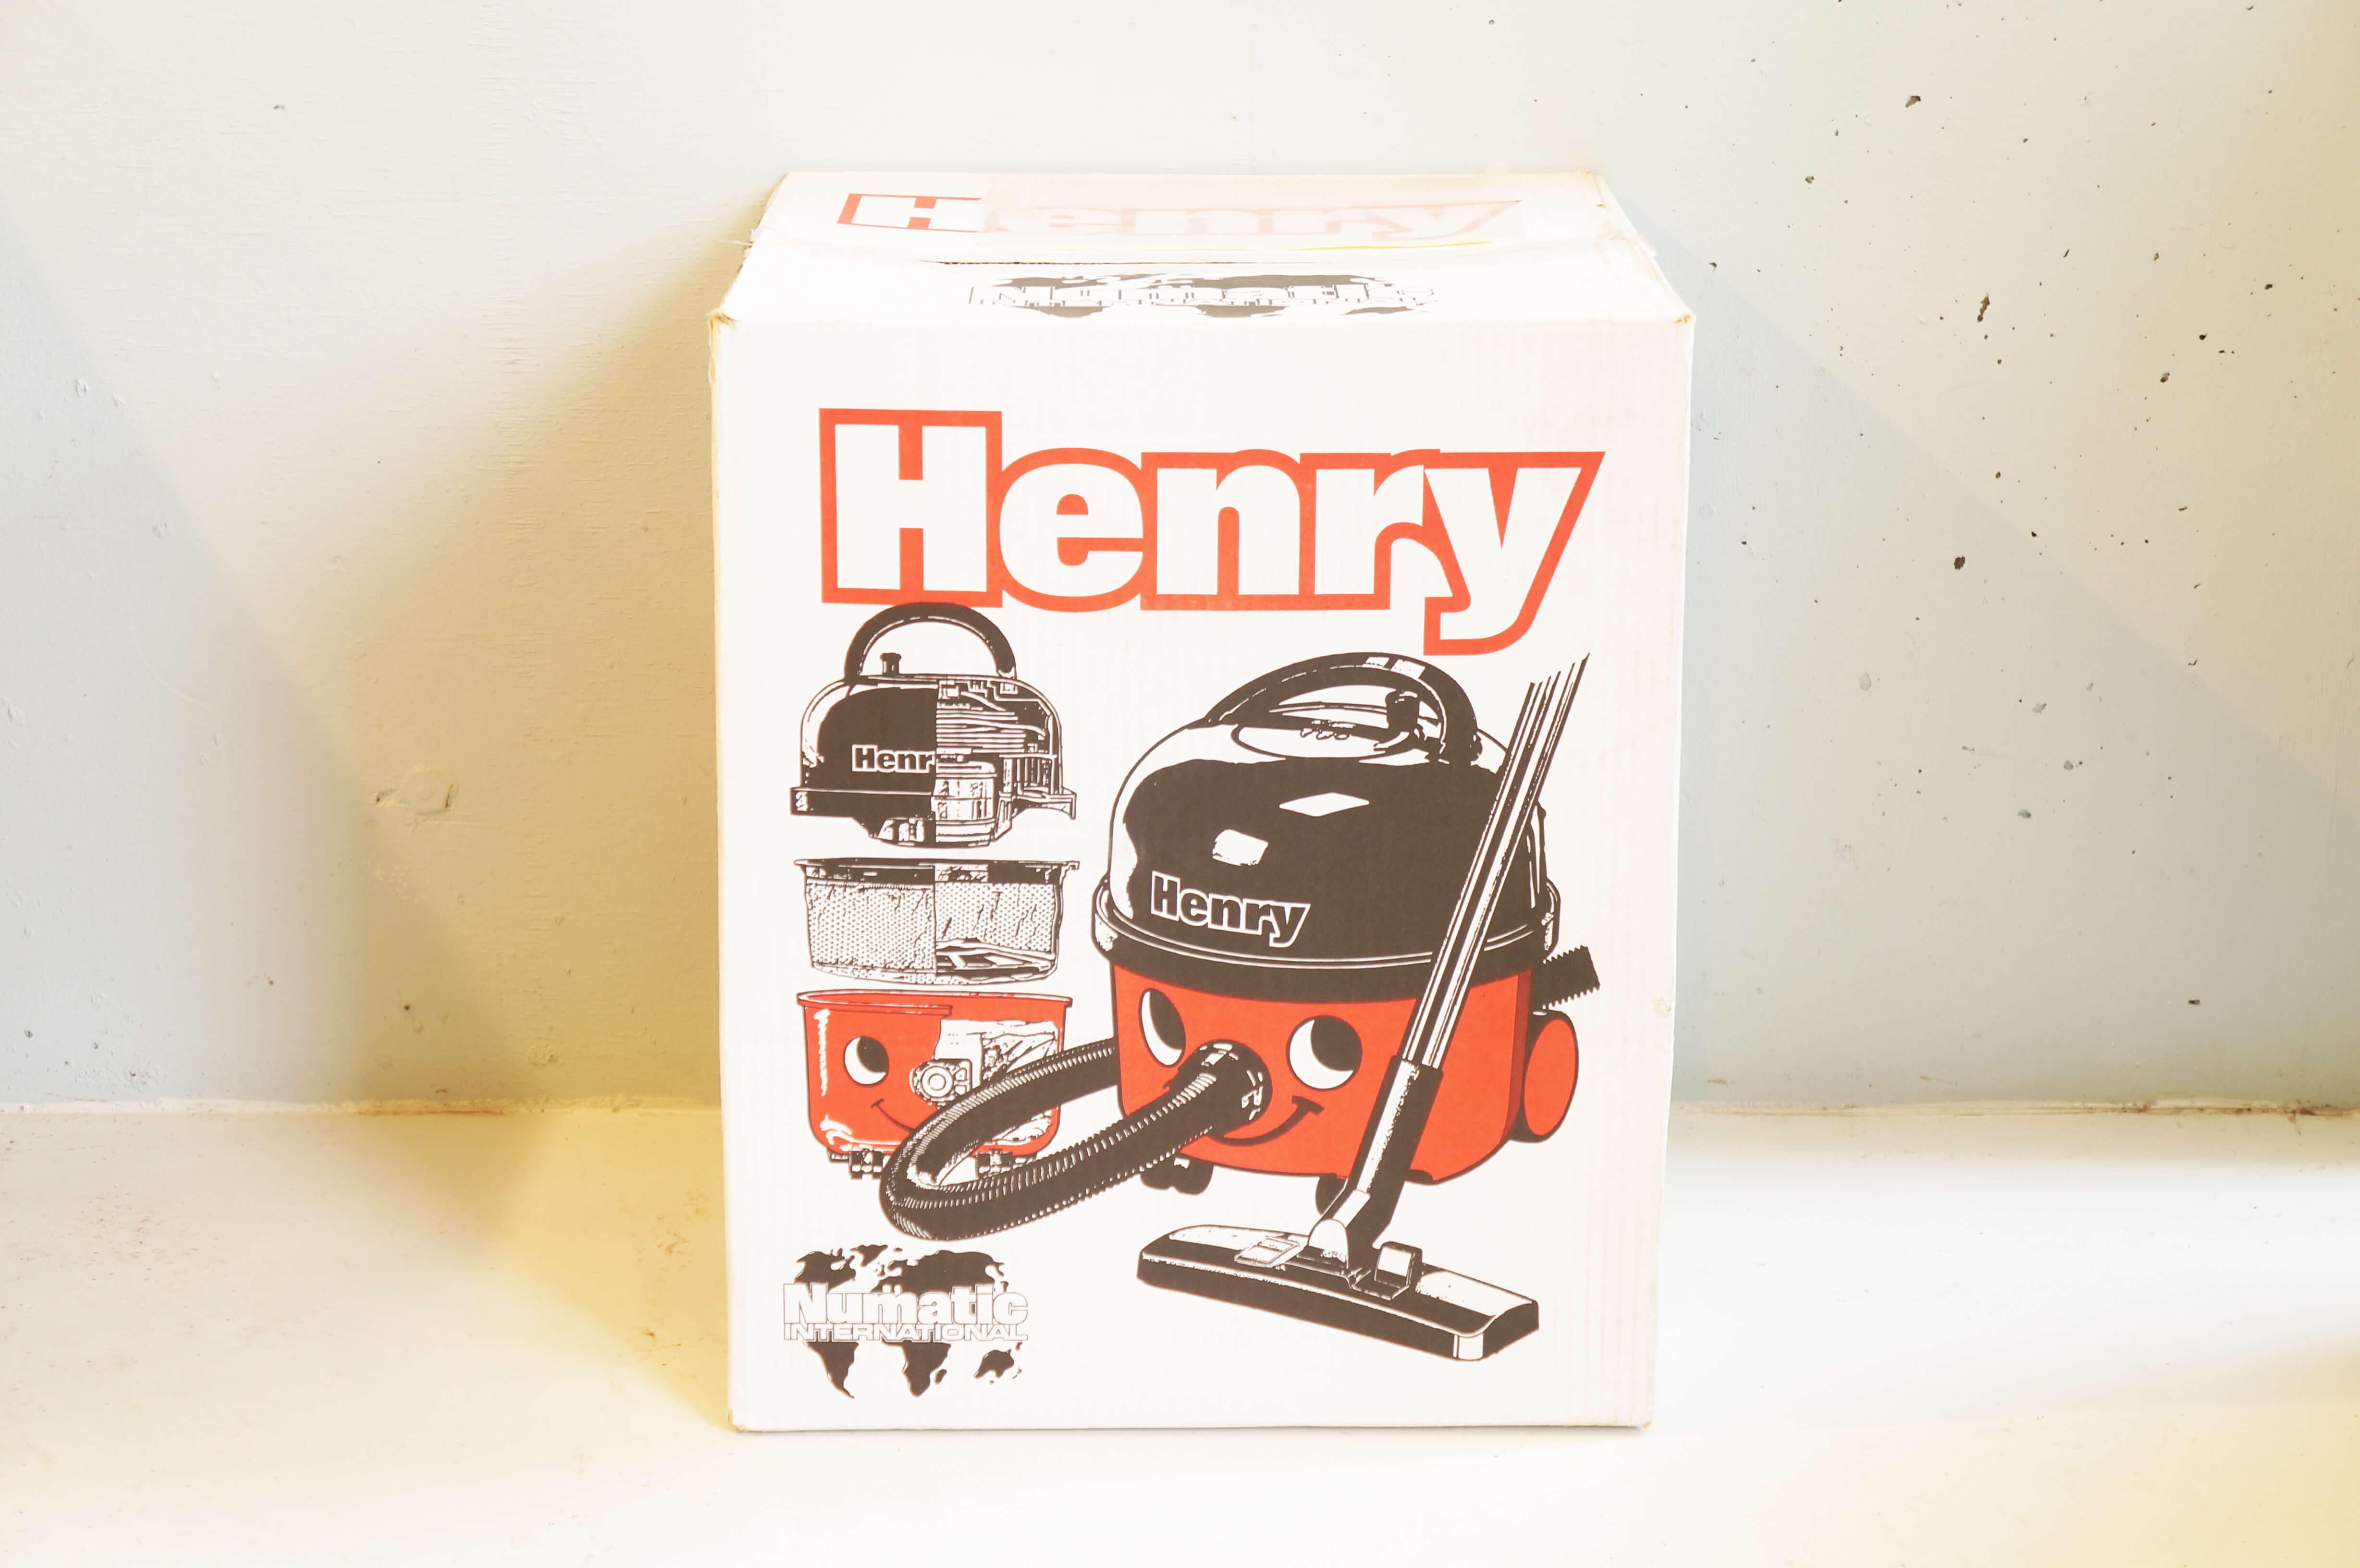 Nematic Henry vacuumcleaner